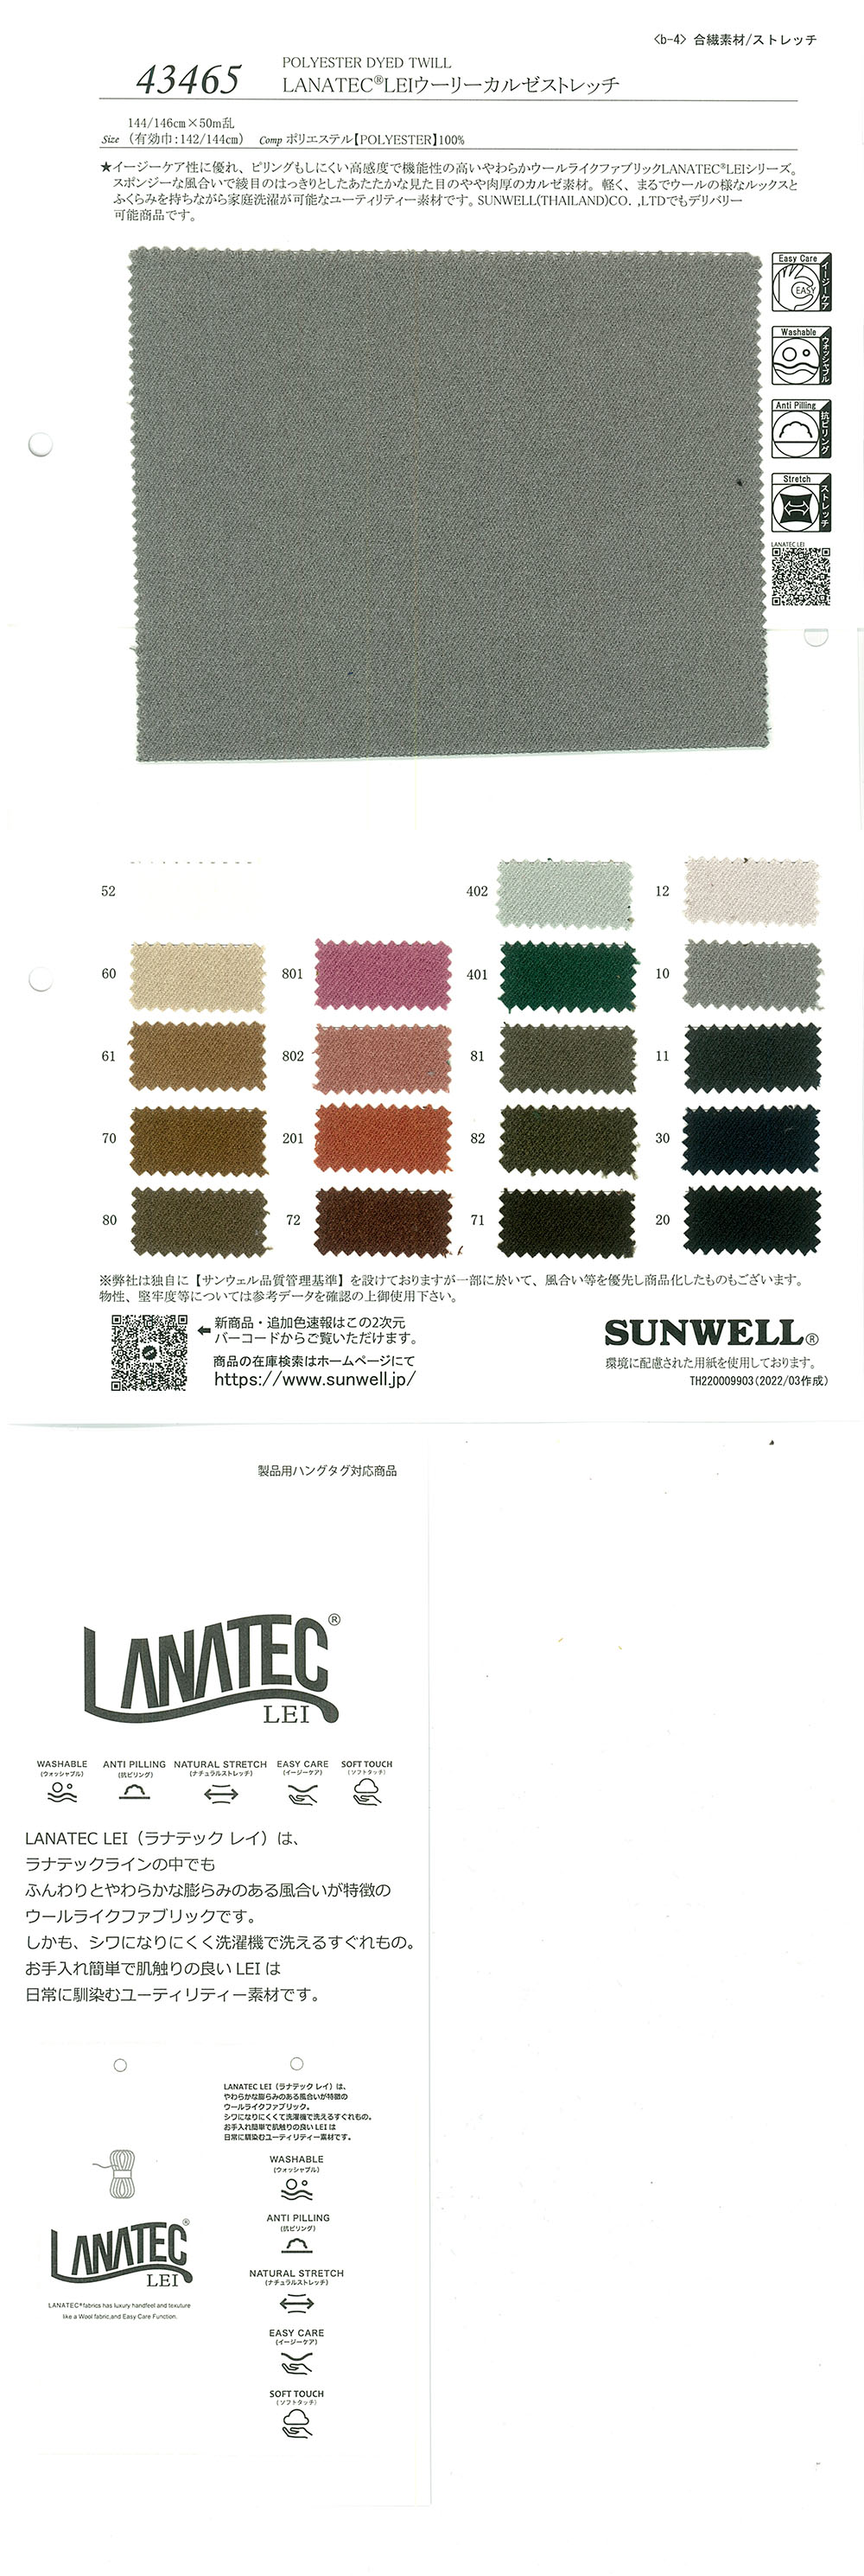 43465 LANATEC(R) LEI Woolly Kersey Stretch[Fabrication De Textile] SUNWELL